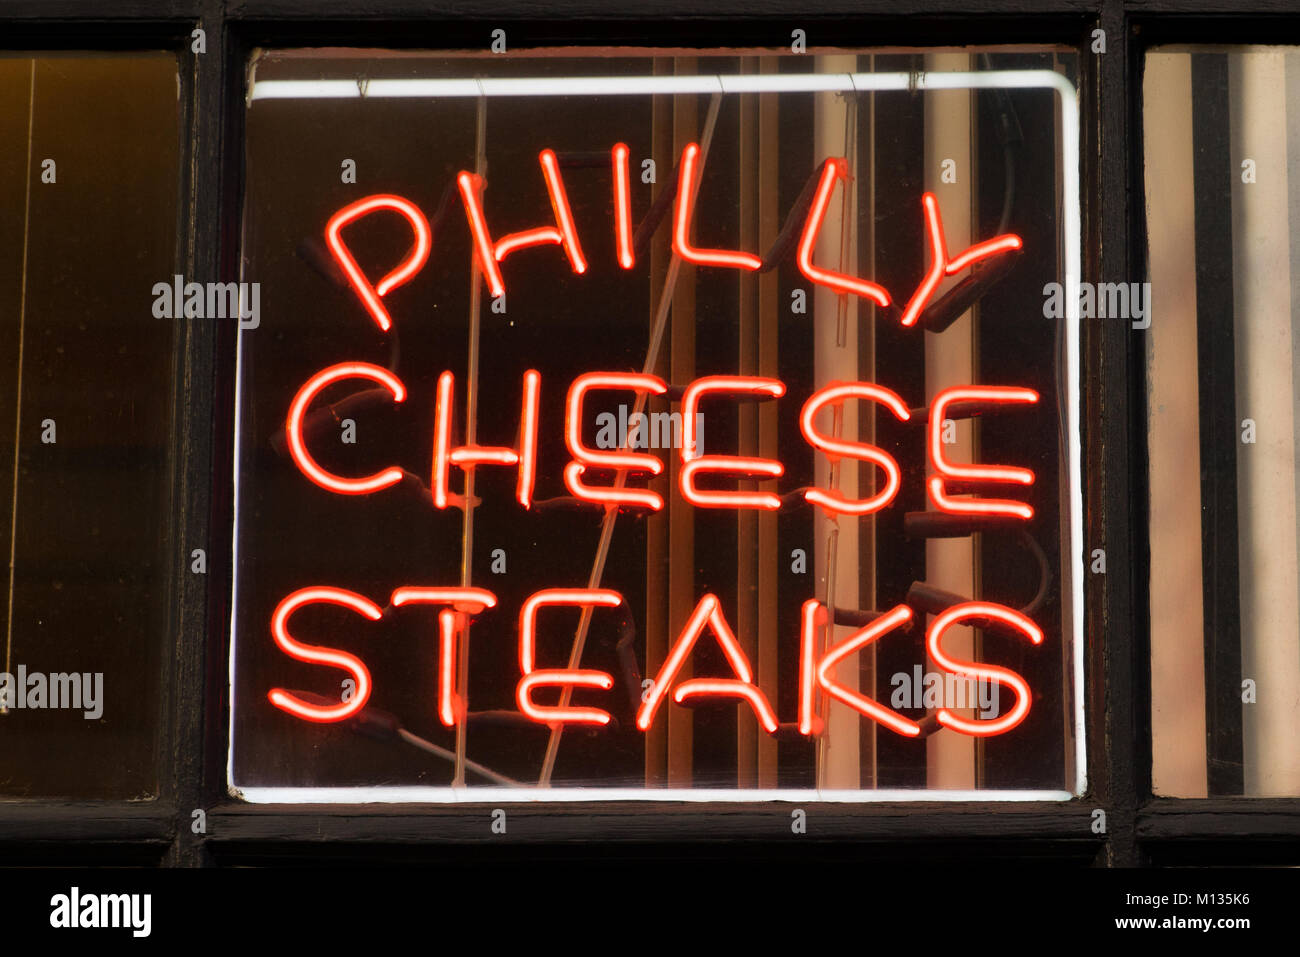 PHILADELPHIA, PA - DECEMBER 13, 2014: Philadelphia Philly Cheese Steak Neon Sign in a local restaurant Stock Photo